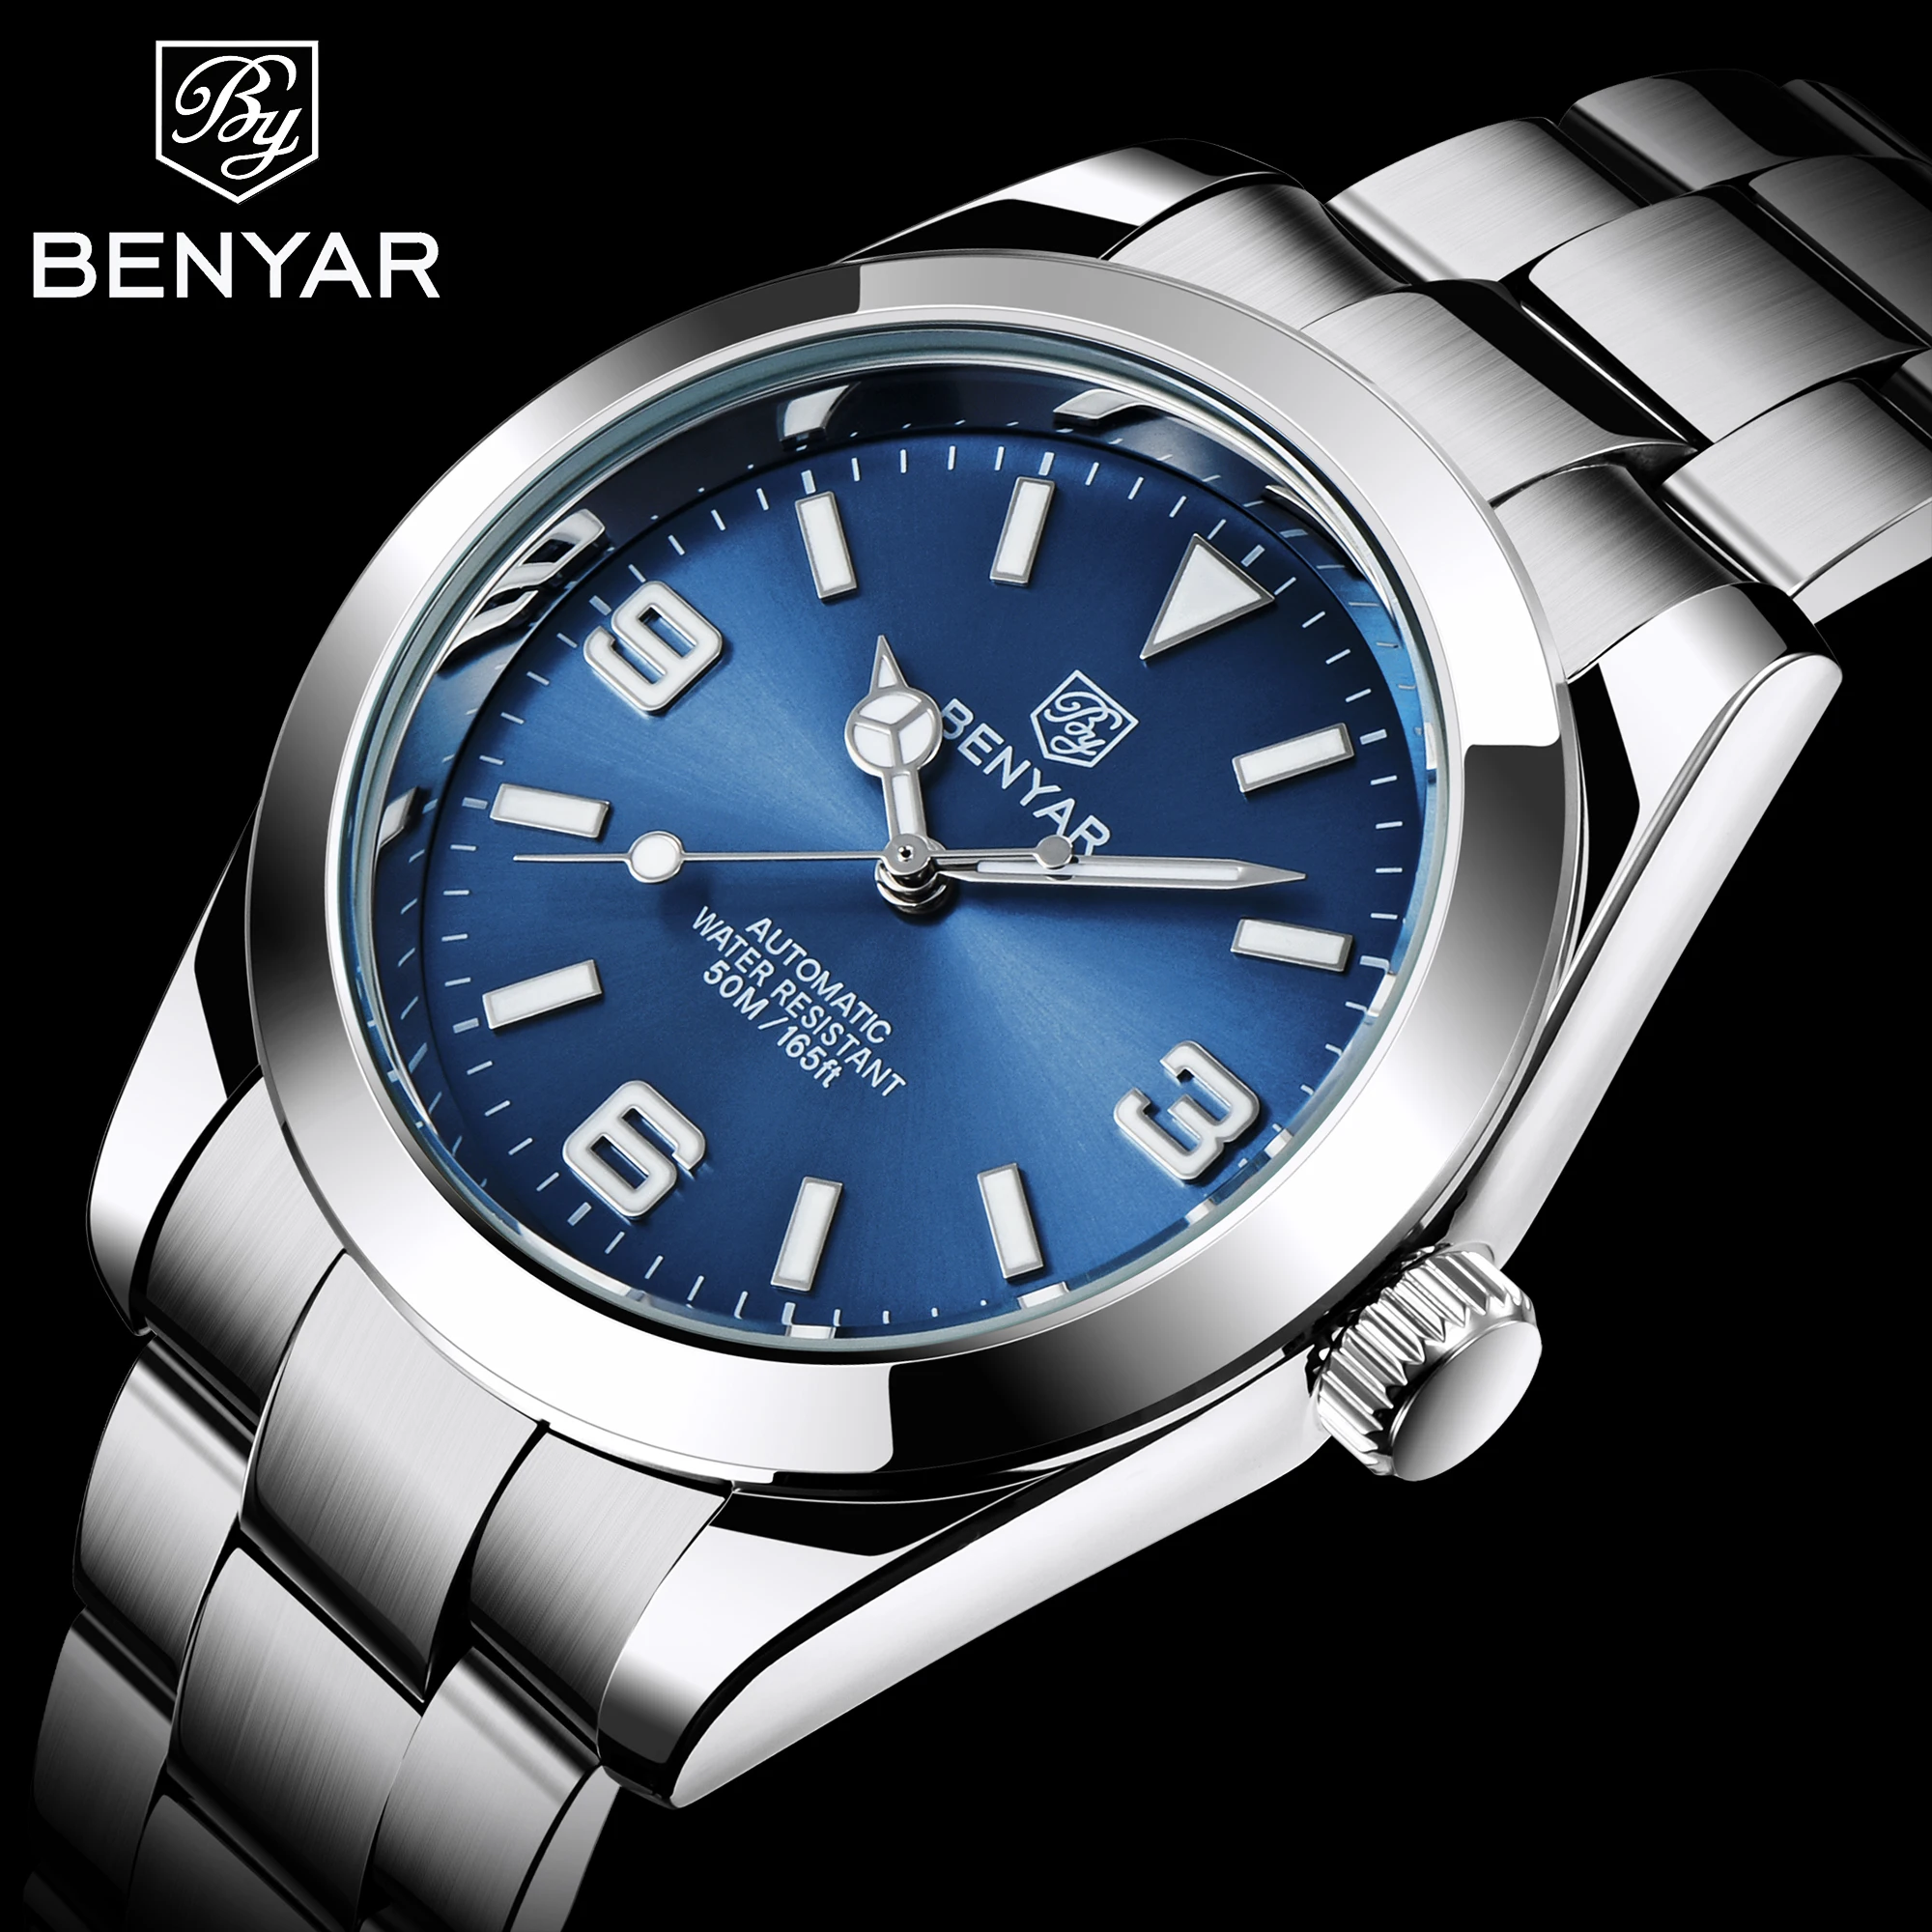 Benyar 2021 new men's automatic mechanical watch top brand men's watch fashion waterproof sports watch luxury relogio masculino